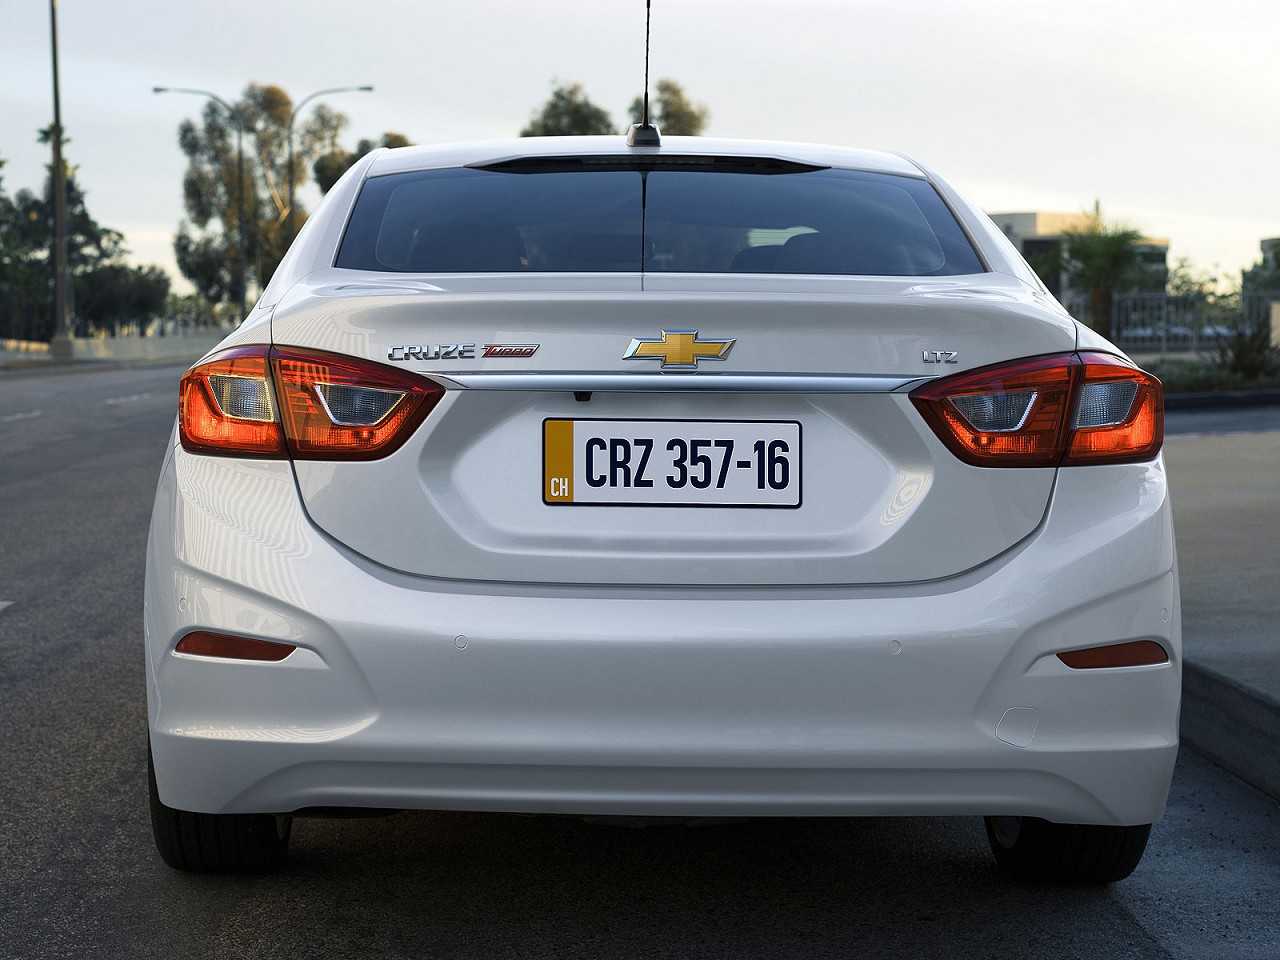 ChevroletCruze 2017 - traseira